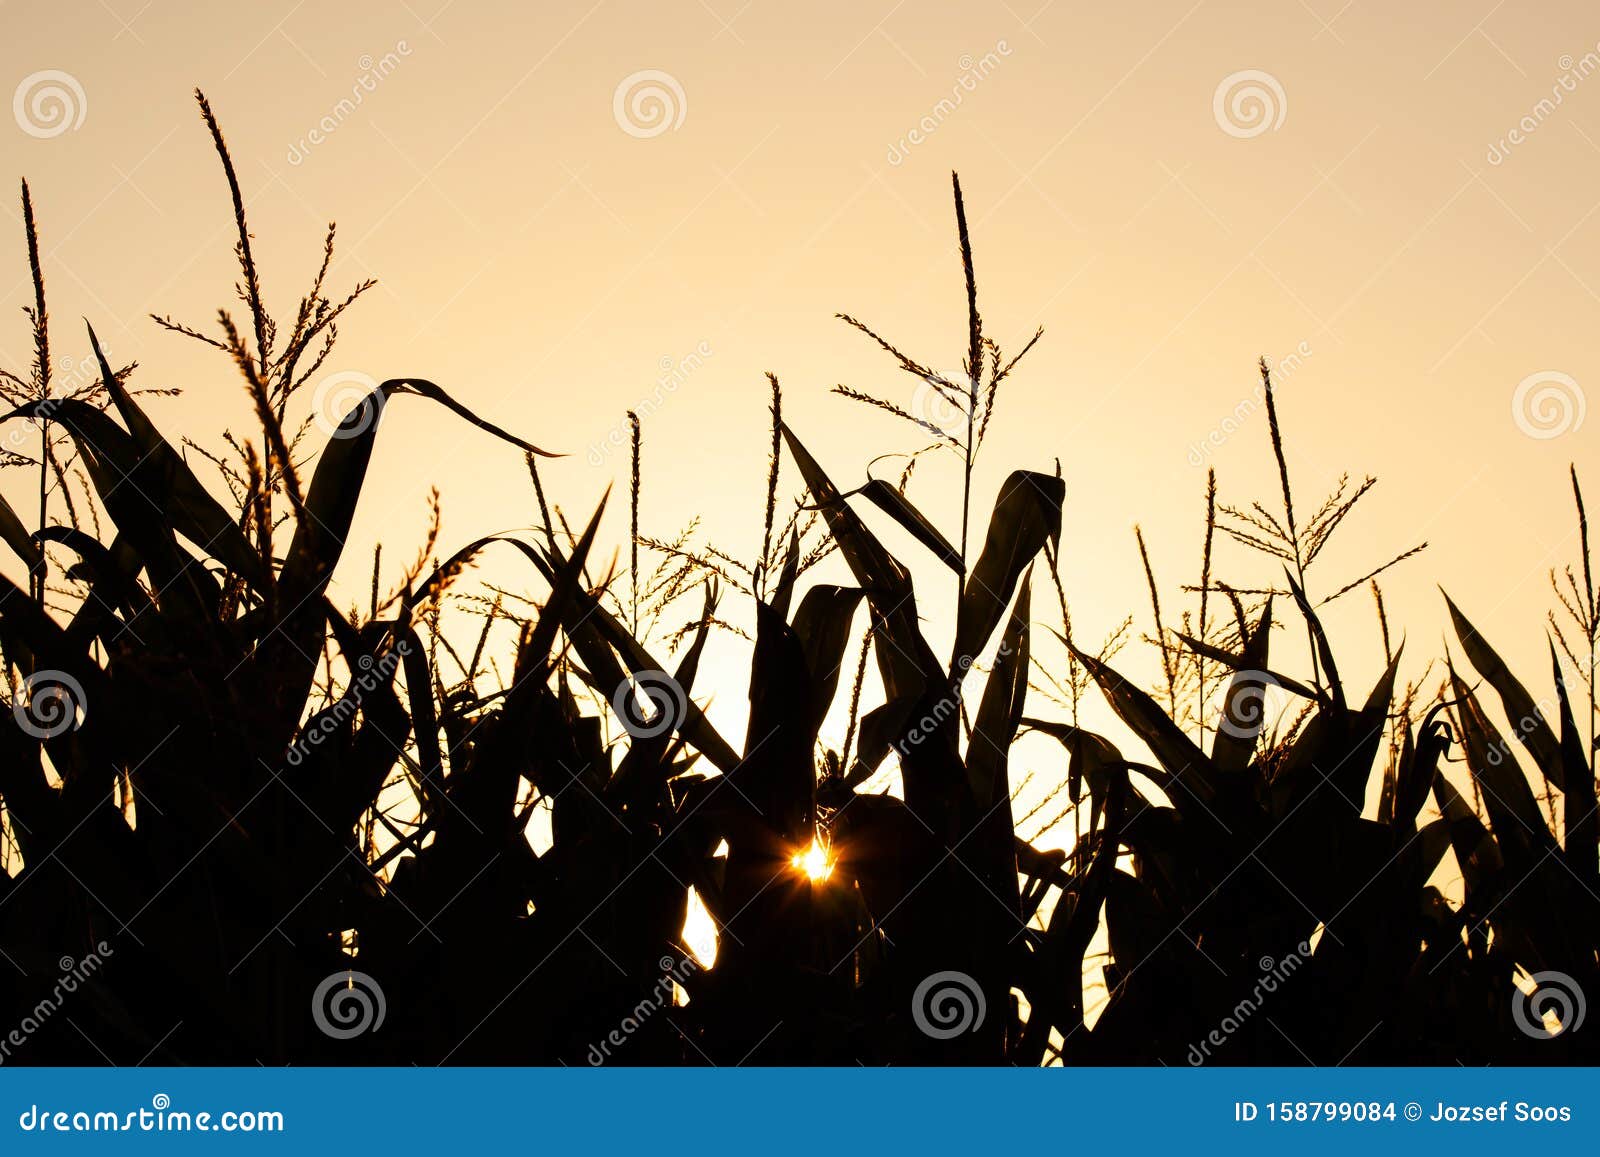 cornfield silhouette landscape in the sunset